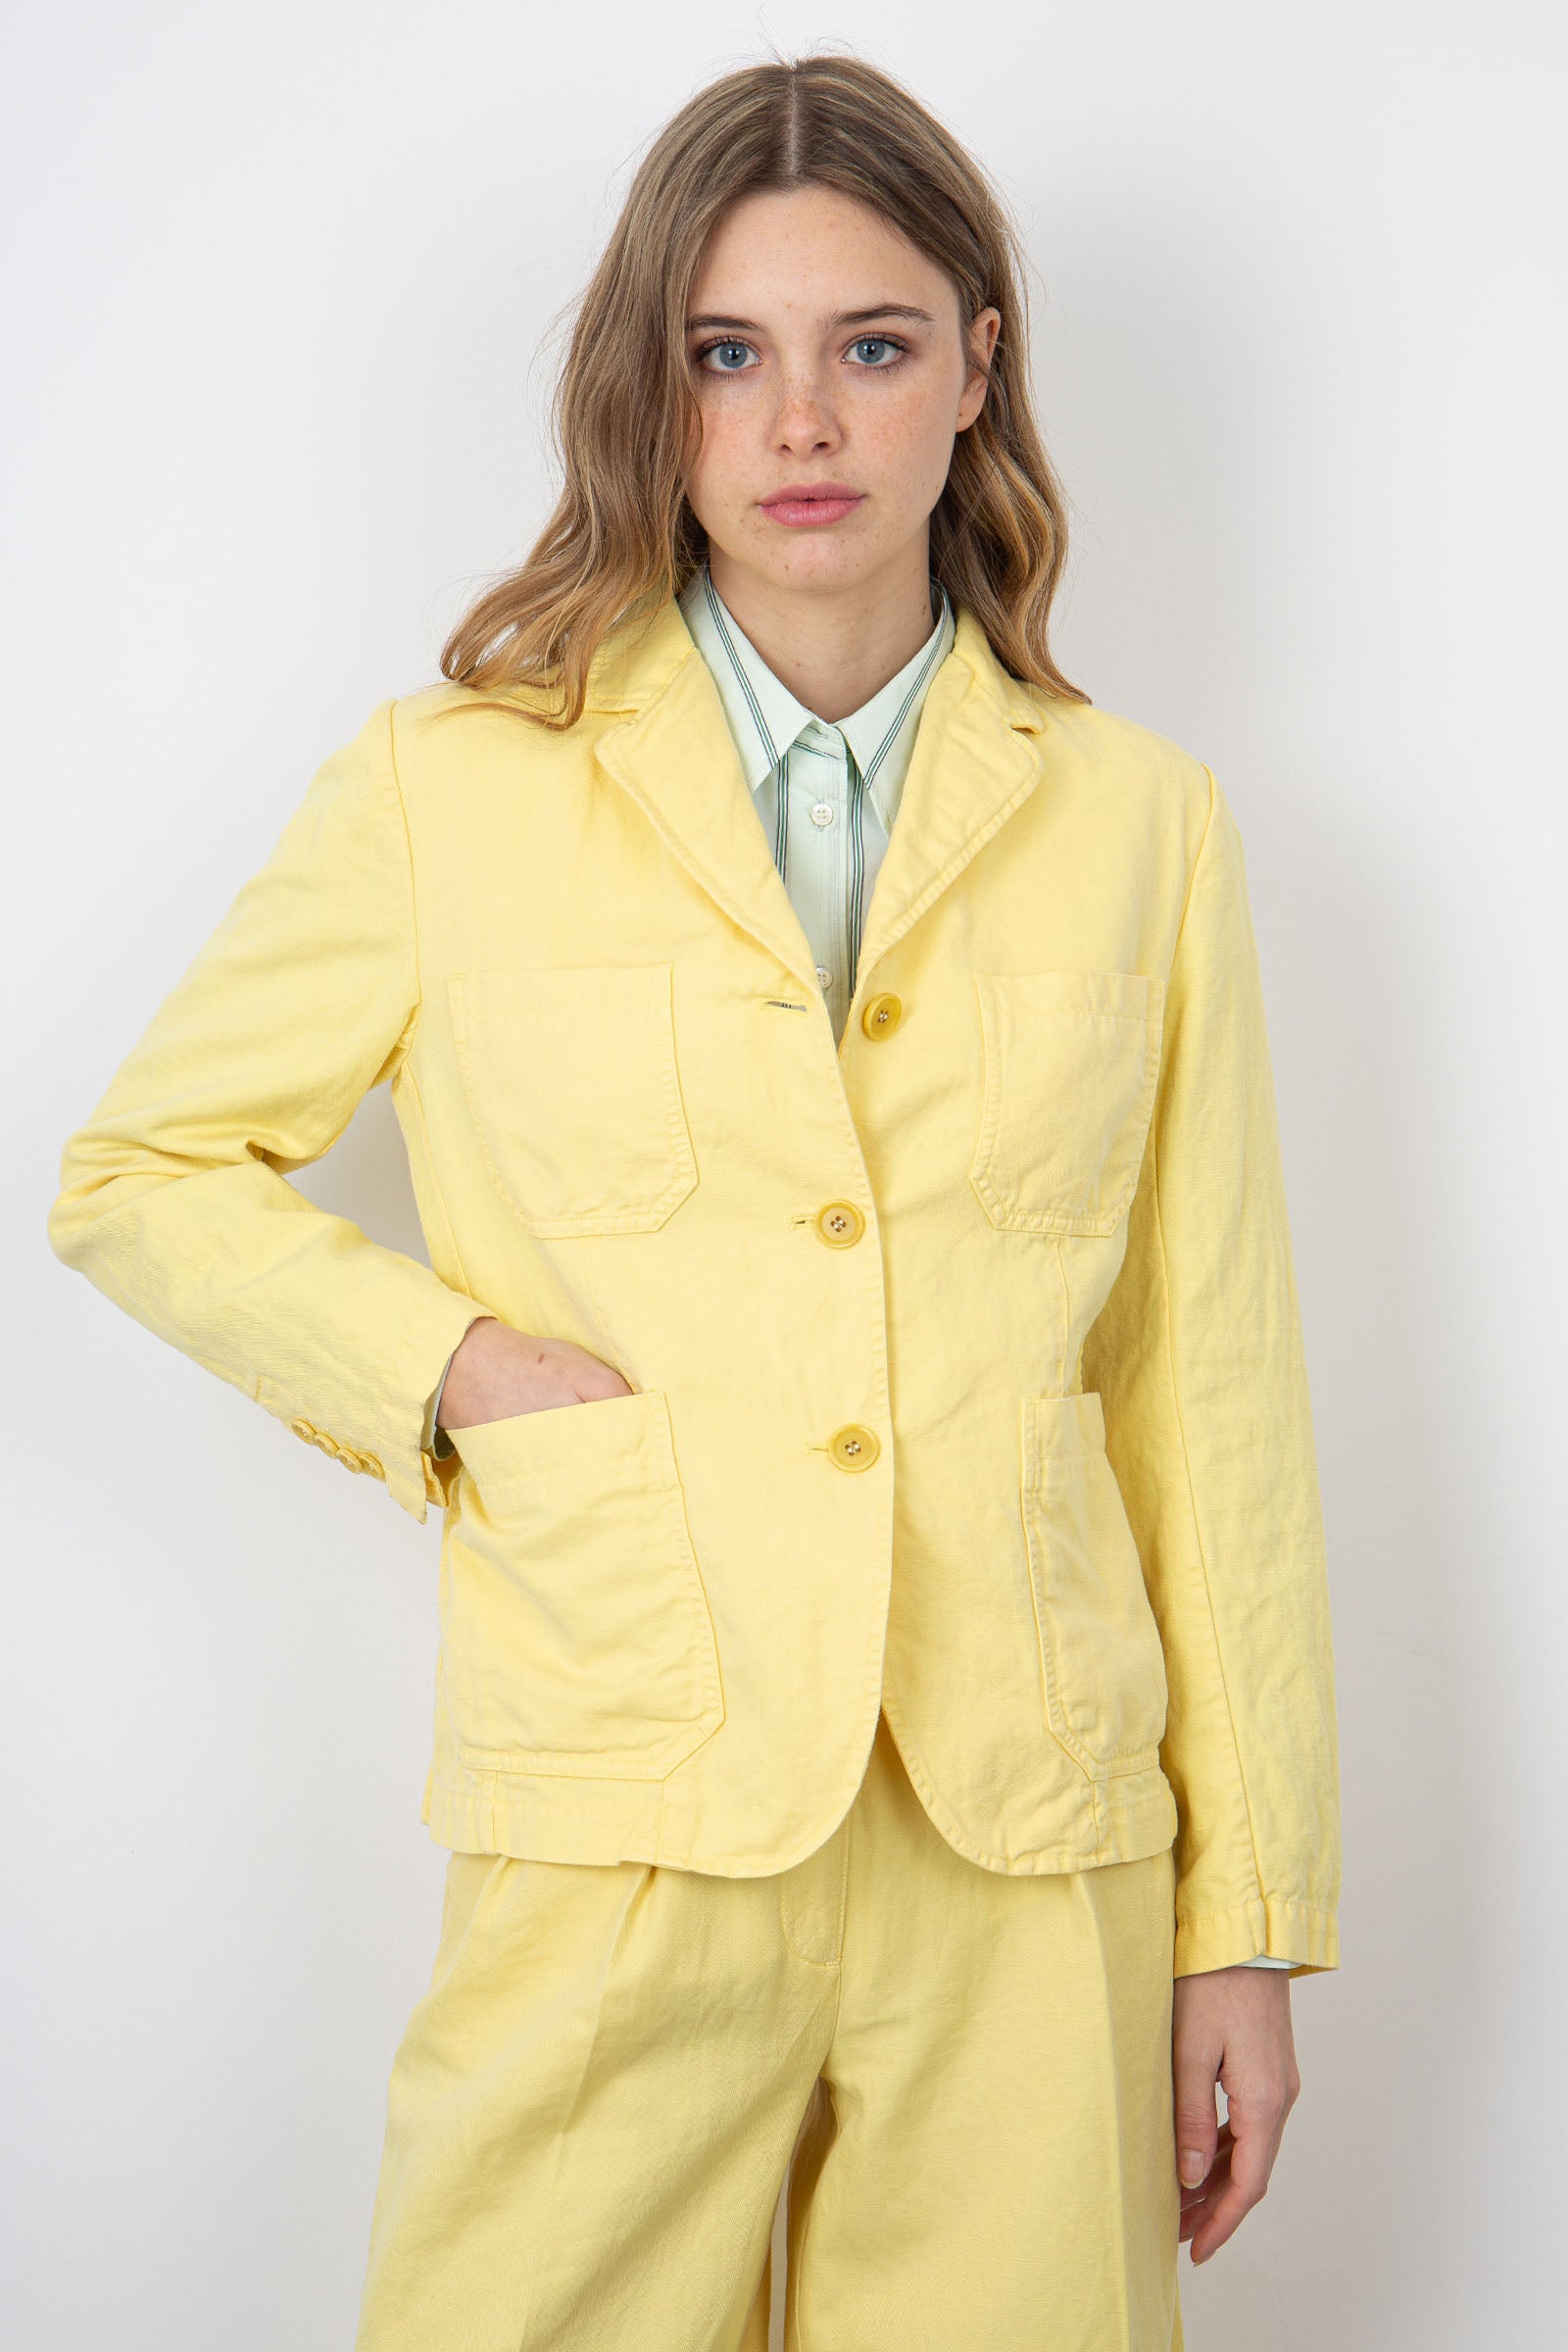 Aspesi Cotton/Linen Yellow Jacket 0930 G20885155 - 1